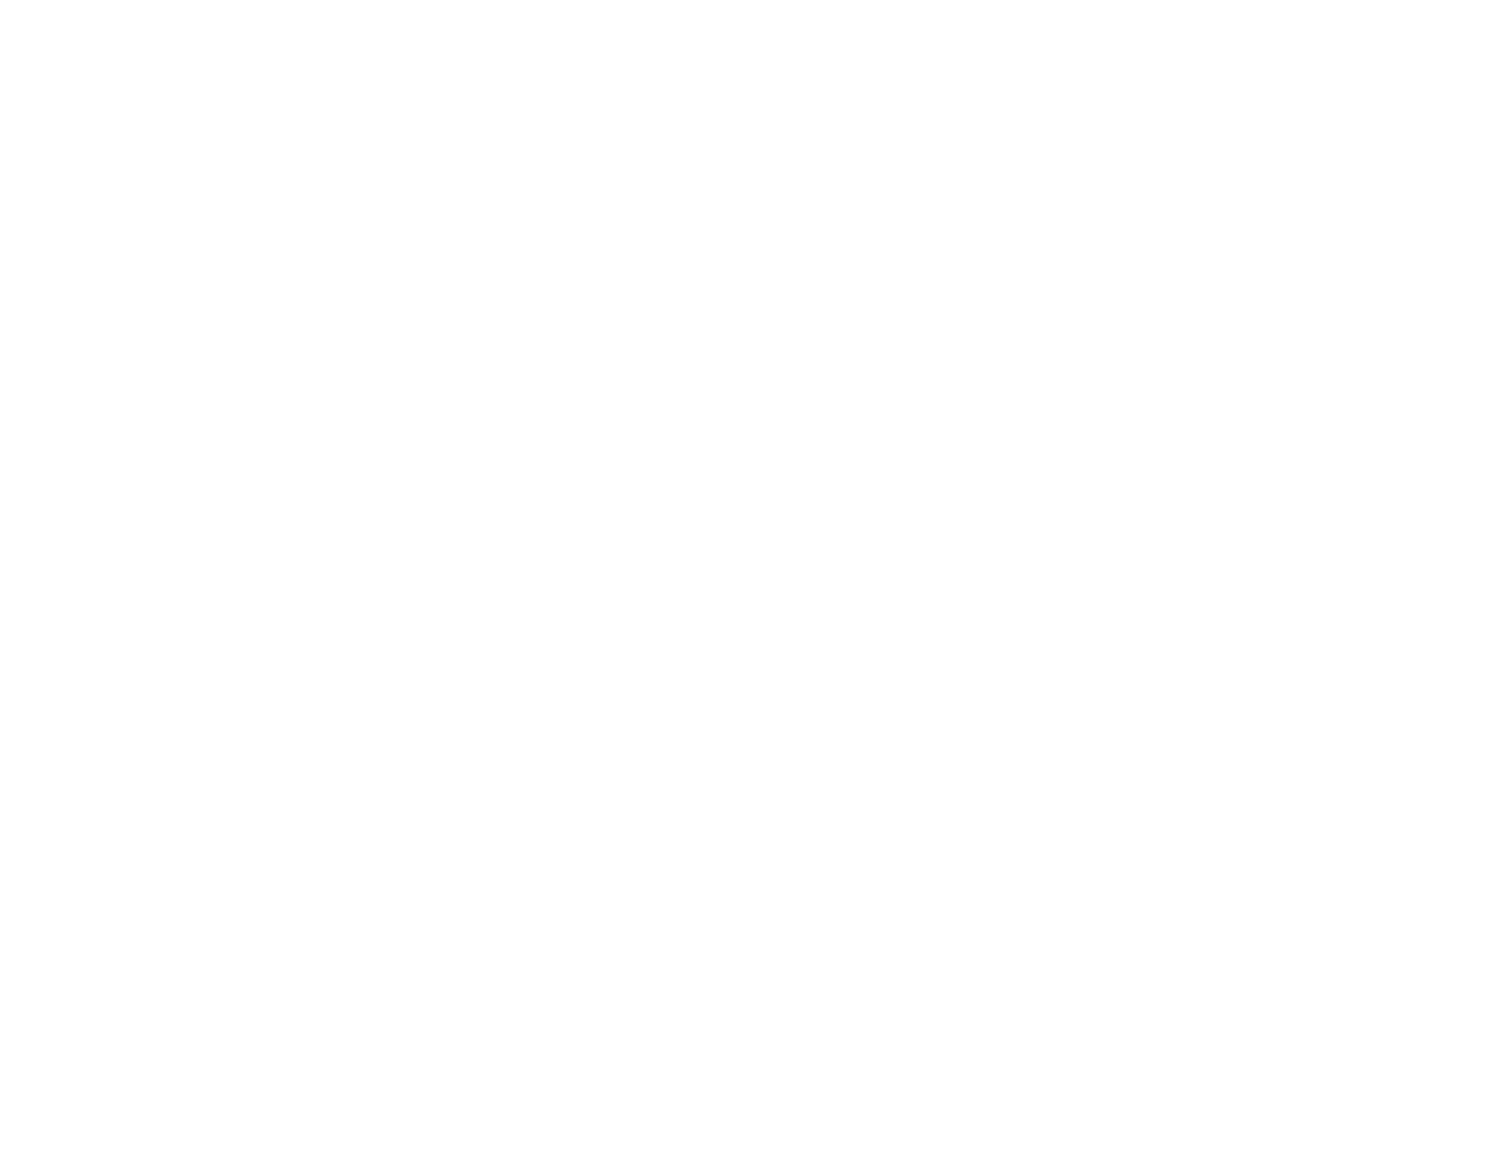 9 Theory